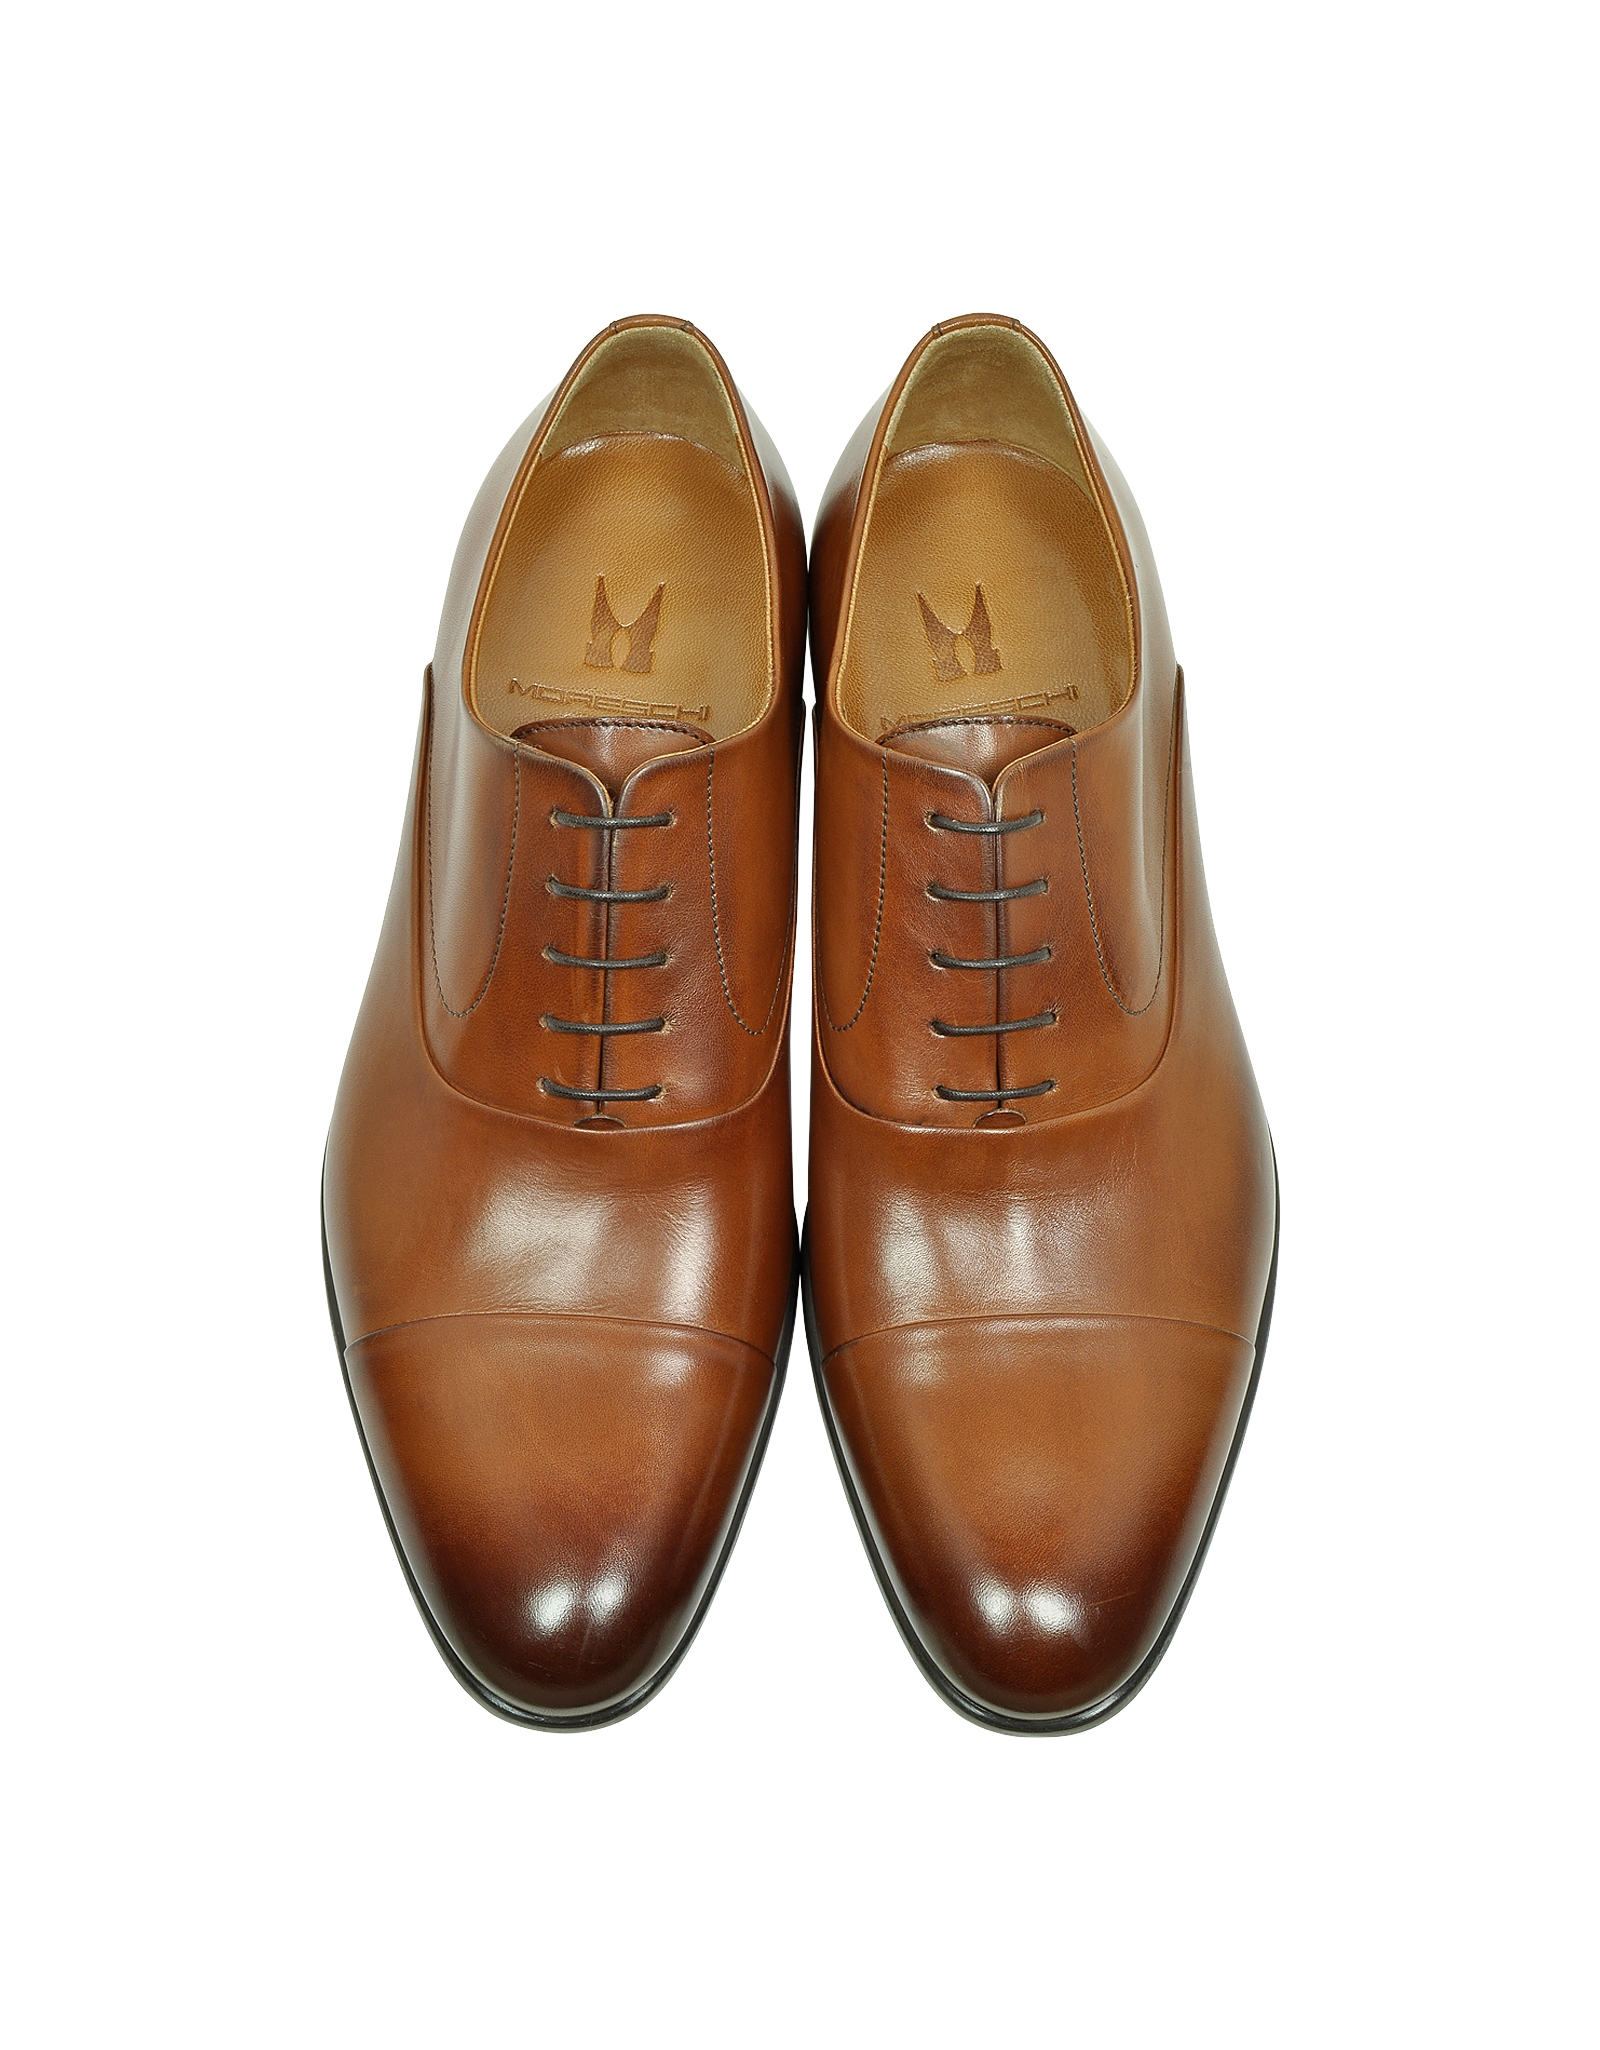 Moreschi Dublin Tan Calf Leather Oxford Shoes W/rubber Sole in Brown ...